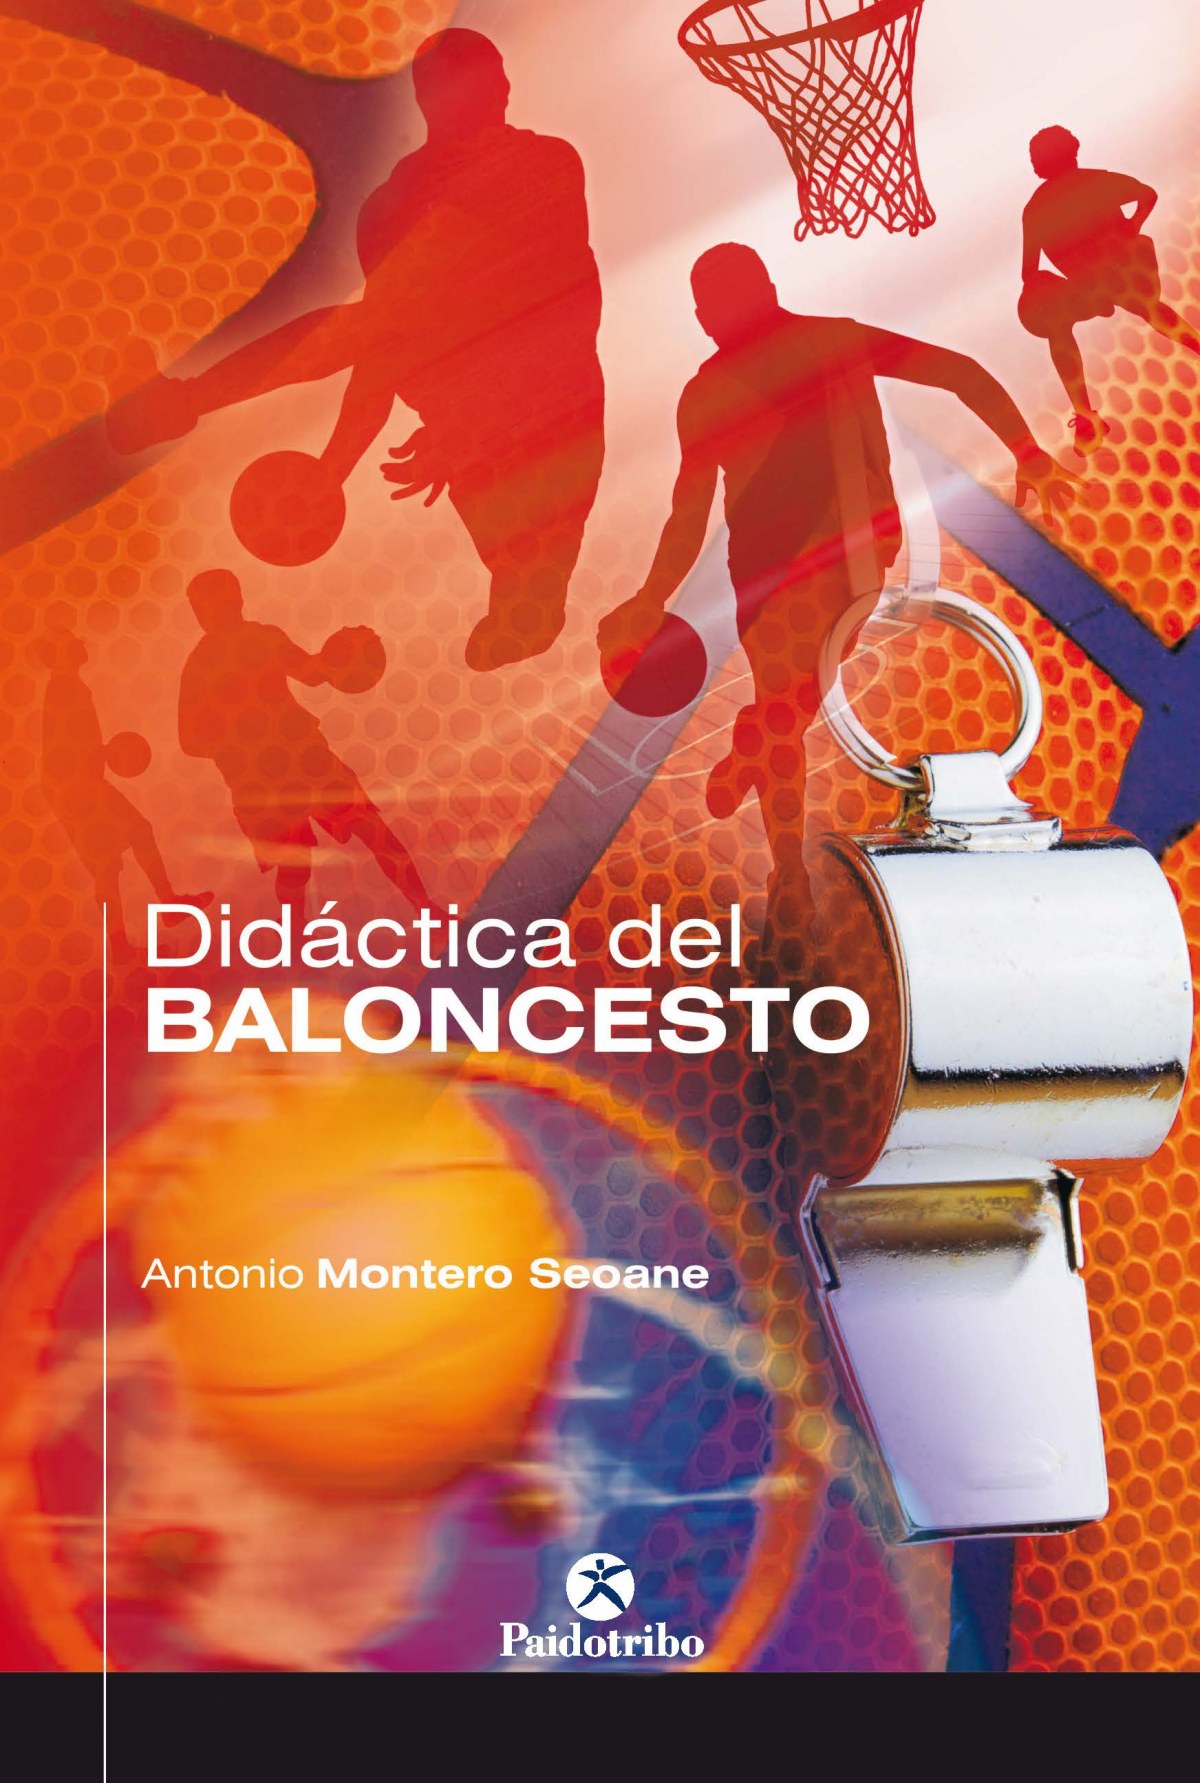 Didactica del baloncesto - Montero Seoane, Antonio